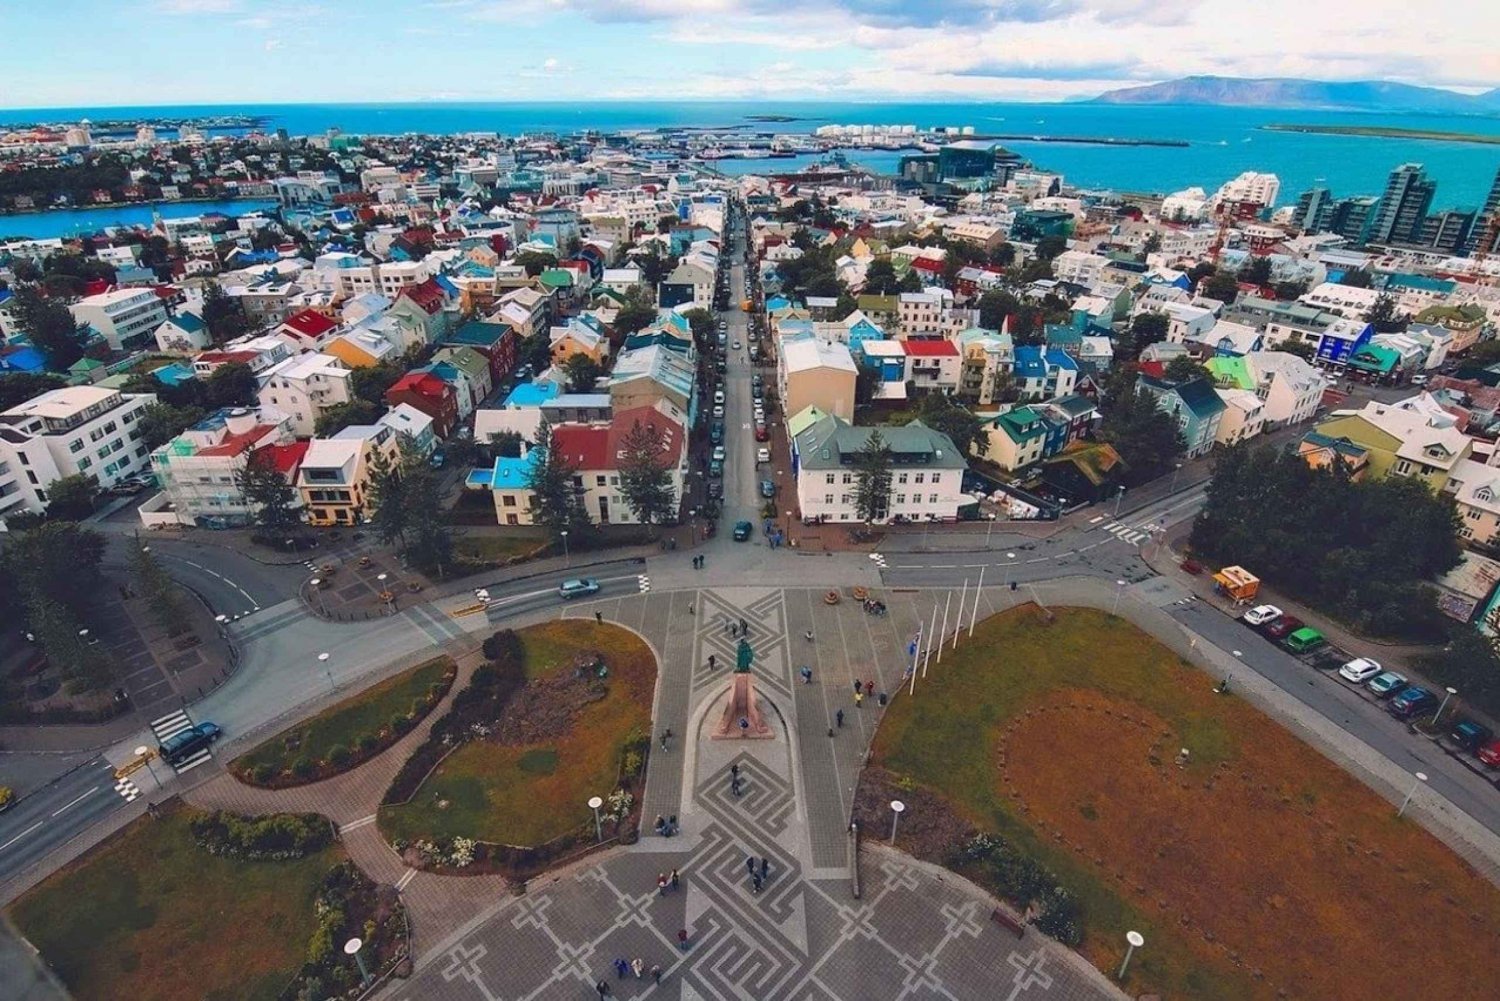 Reykjavik: Old Town, National Museum, & Laugavegur Tour